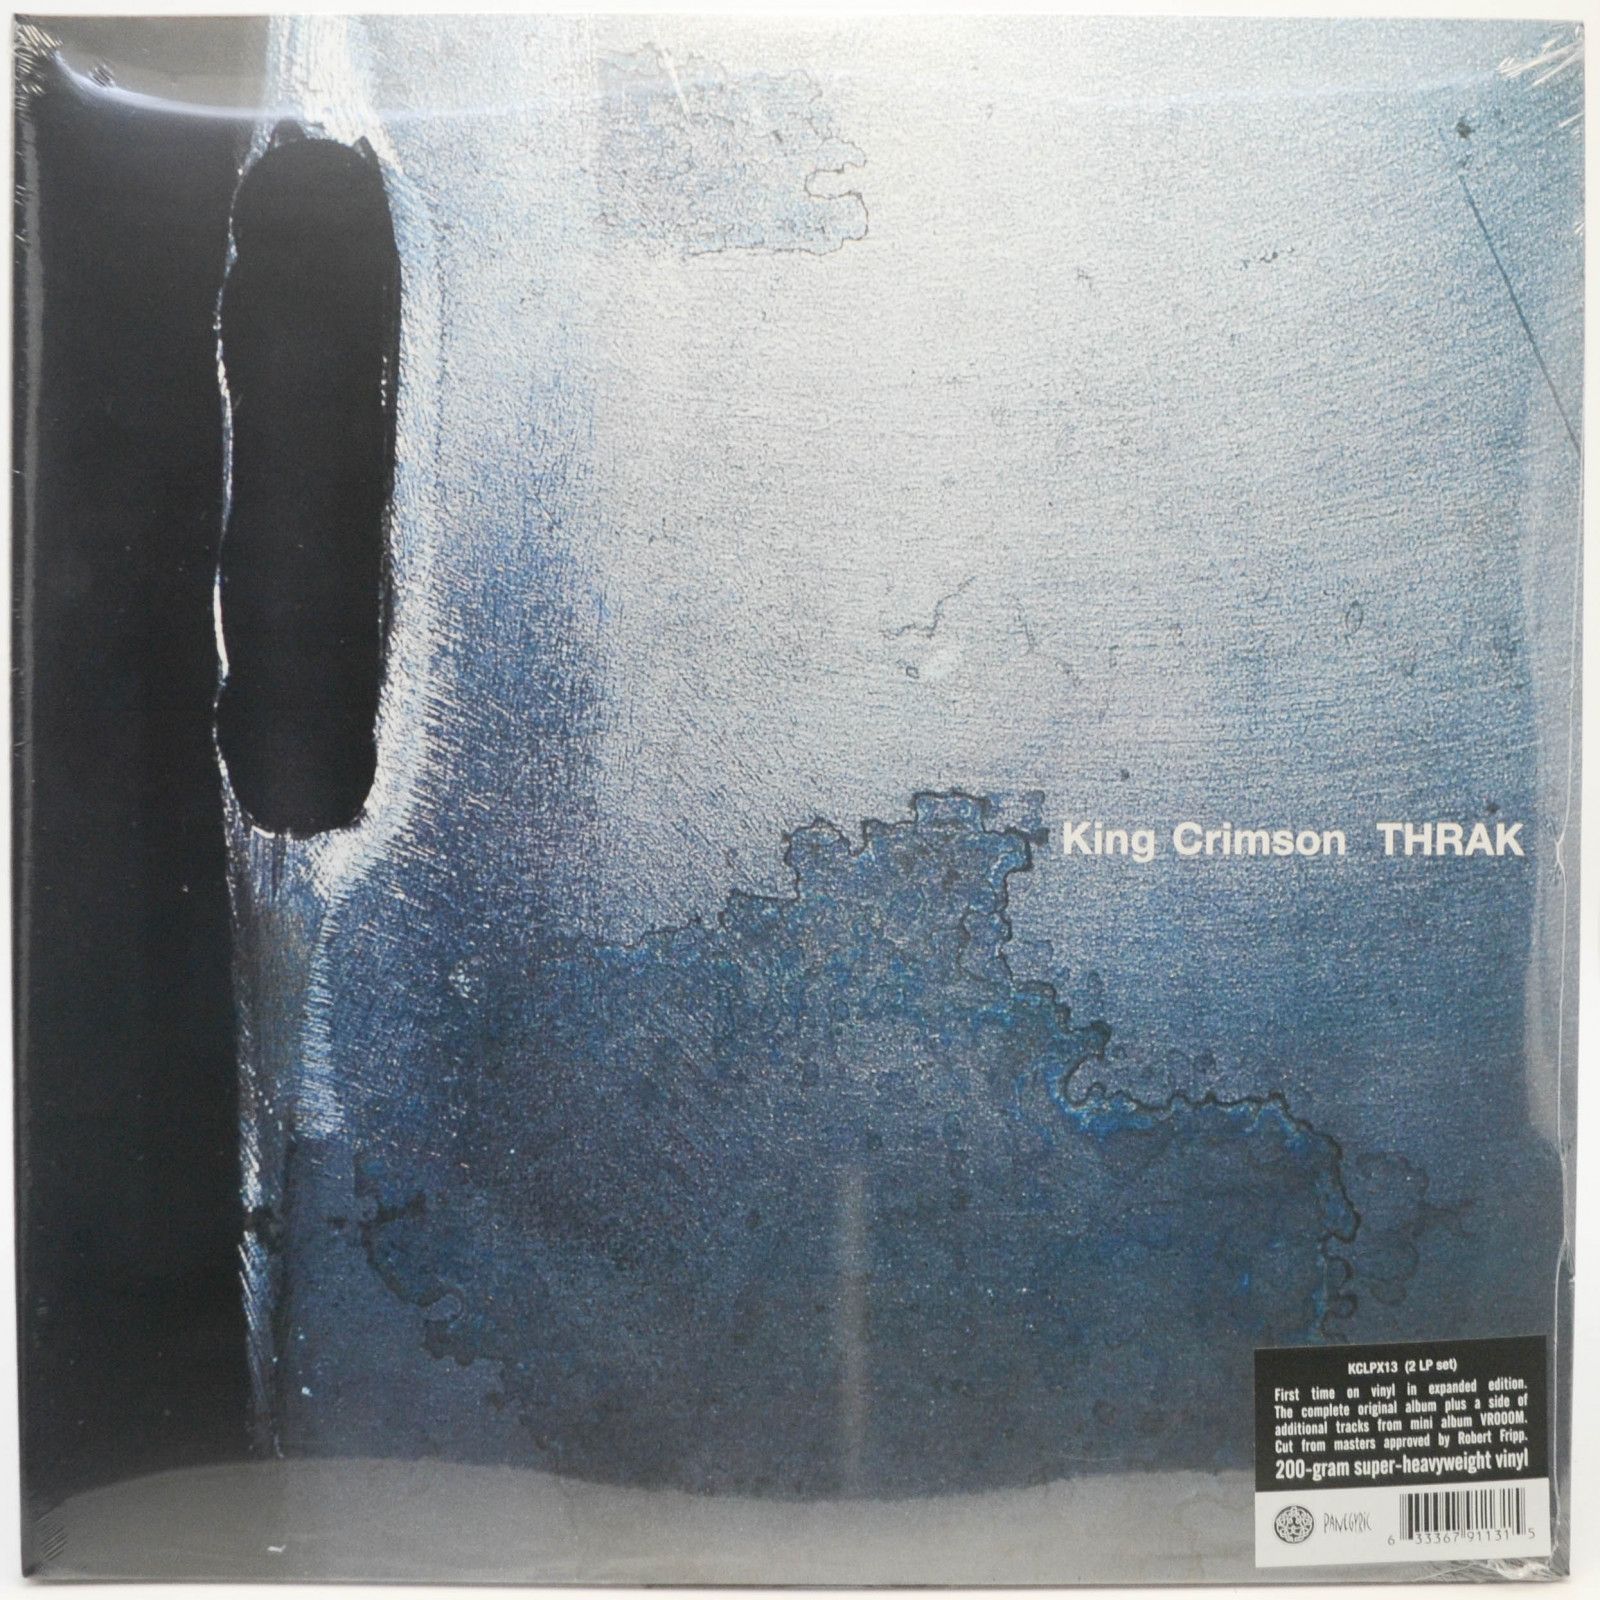 King Crimson — THRAK (2LP), 1995